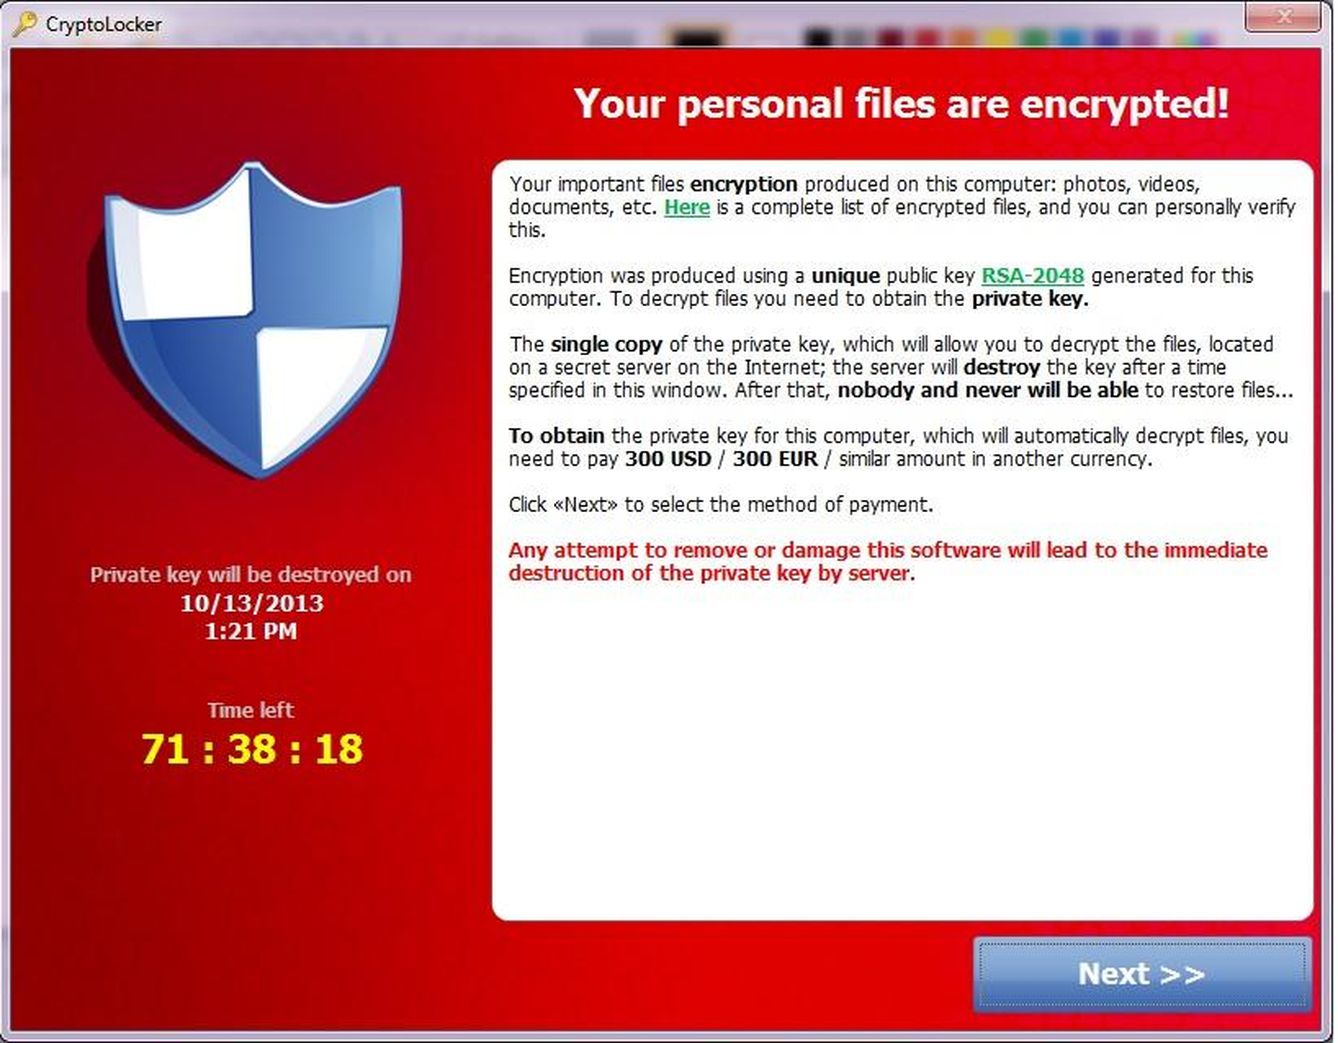 Ejemplo de llamado 'ransomware' llamado CryptoLocker